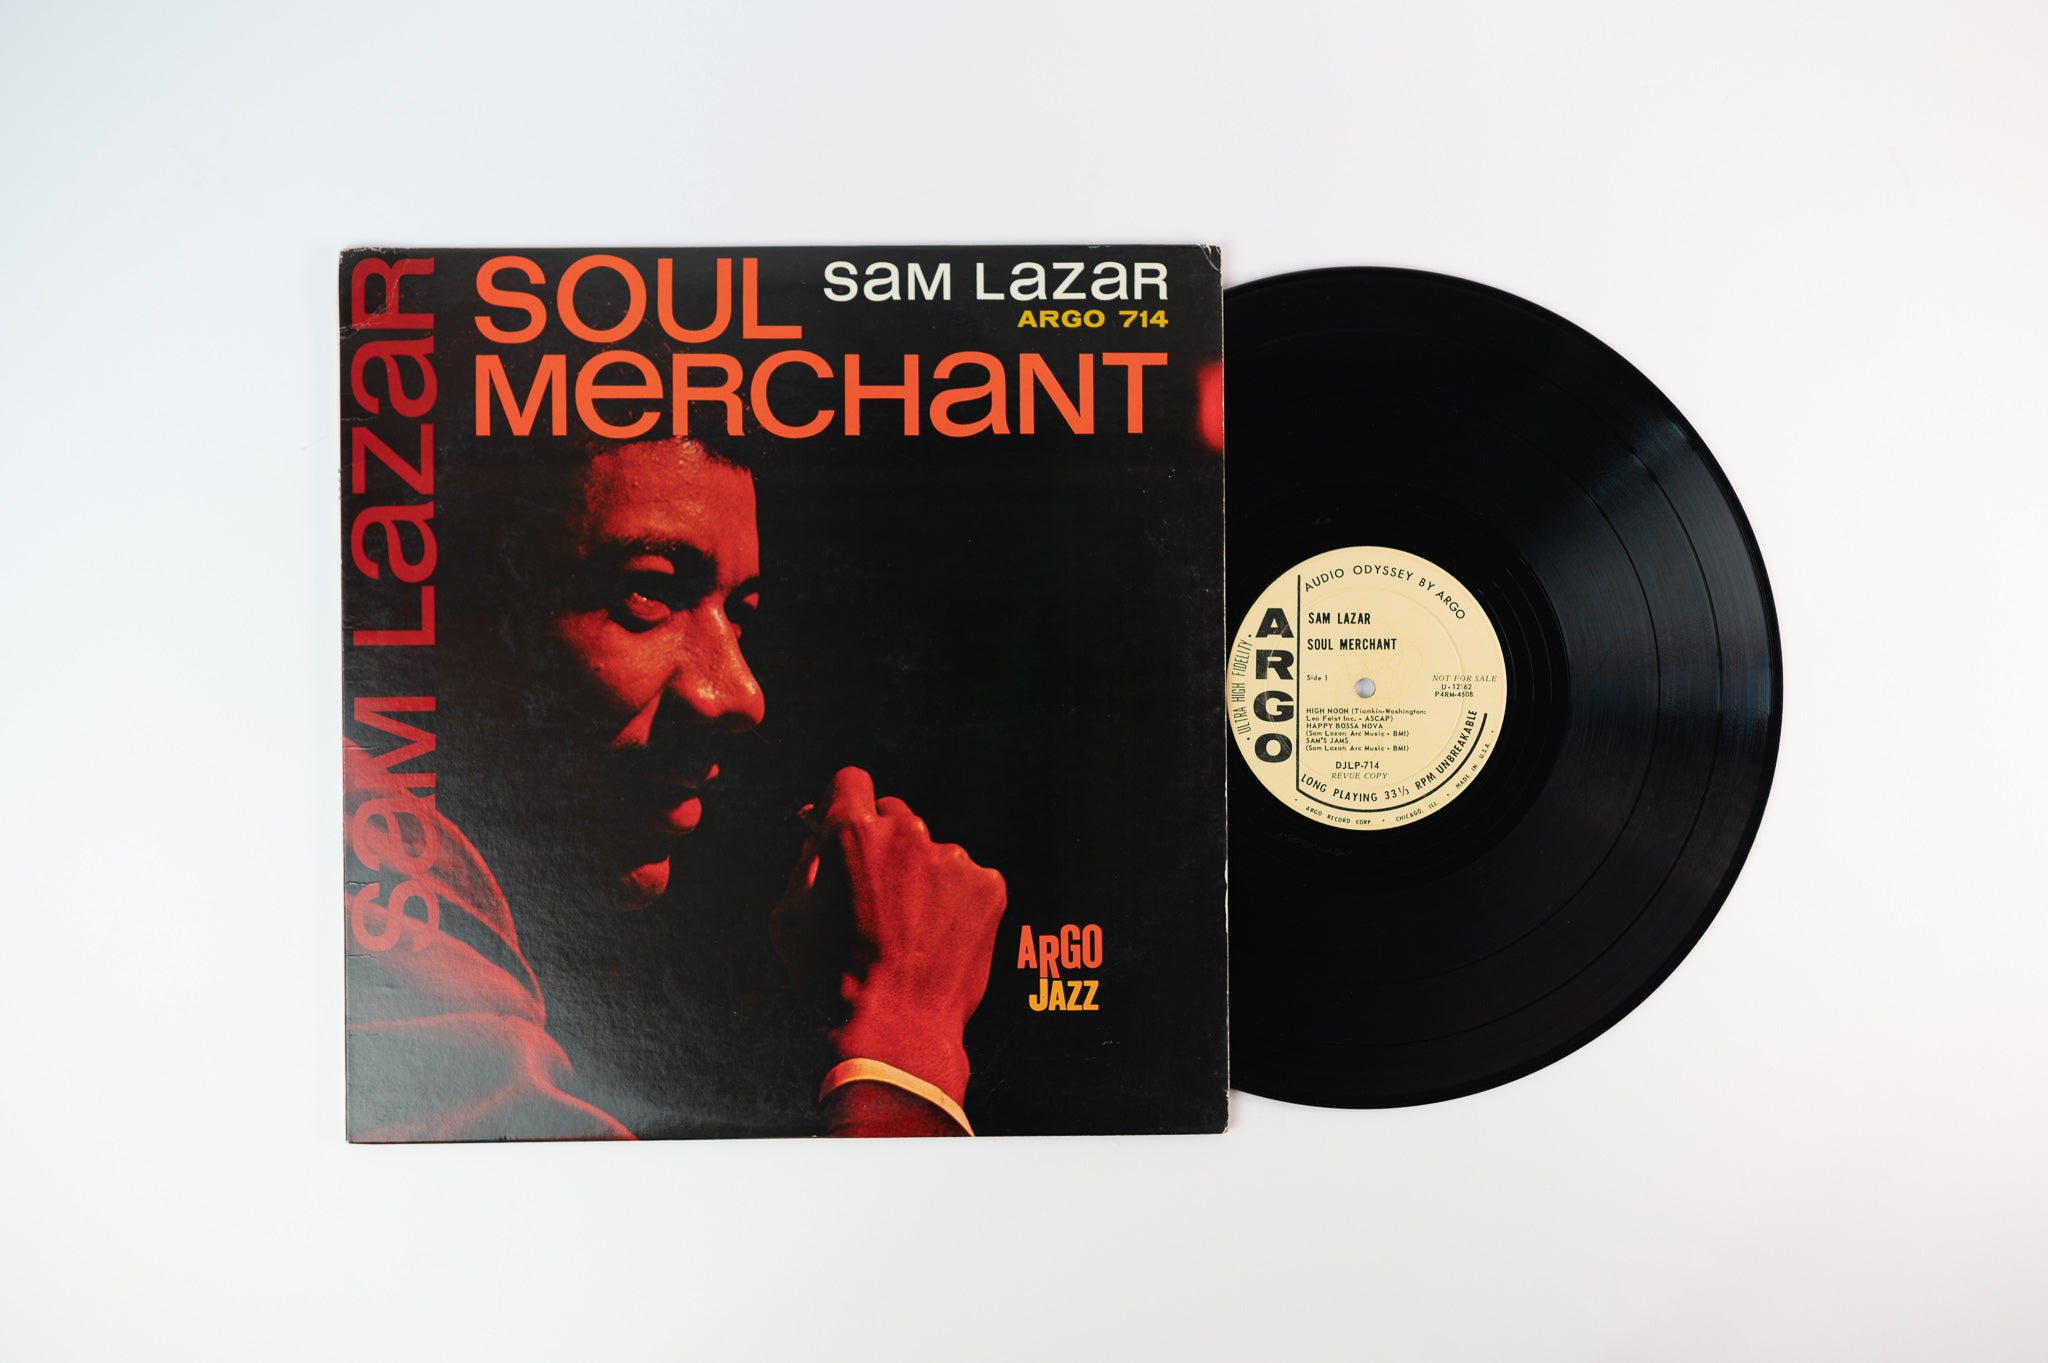 Sam Lazar - Soul Merchant on Argo - Mono Promo